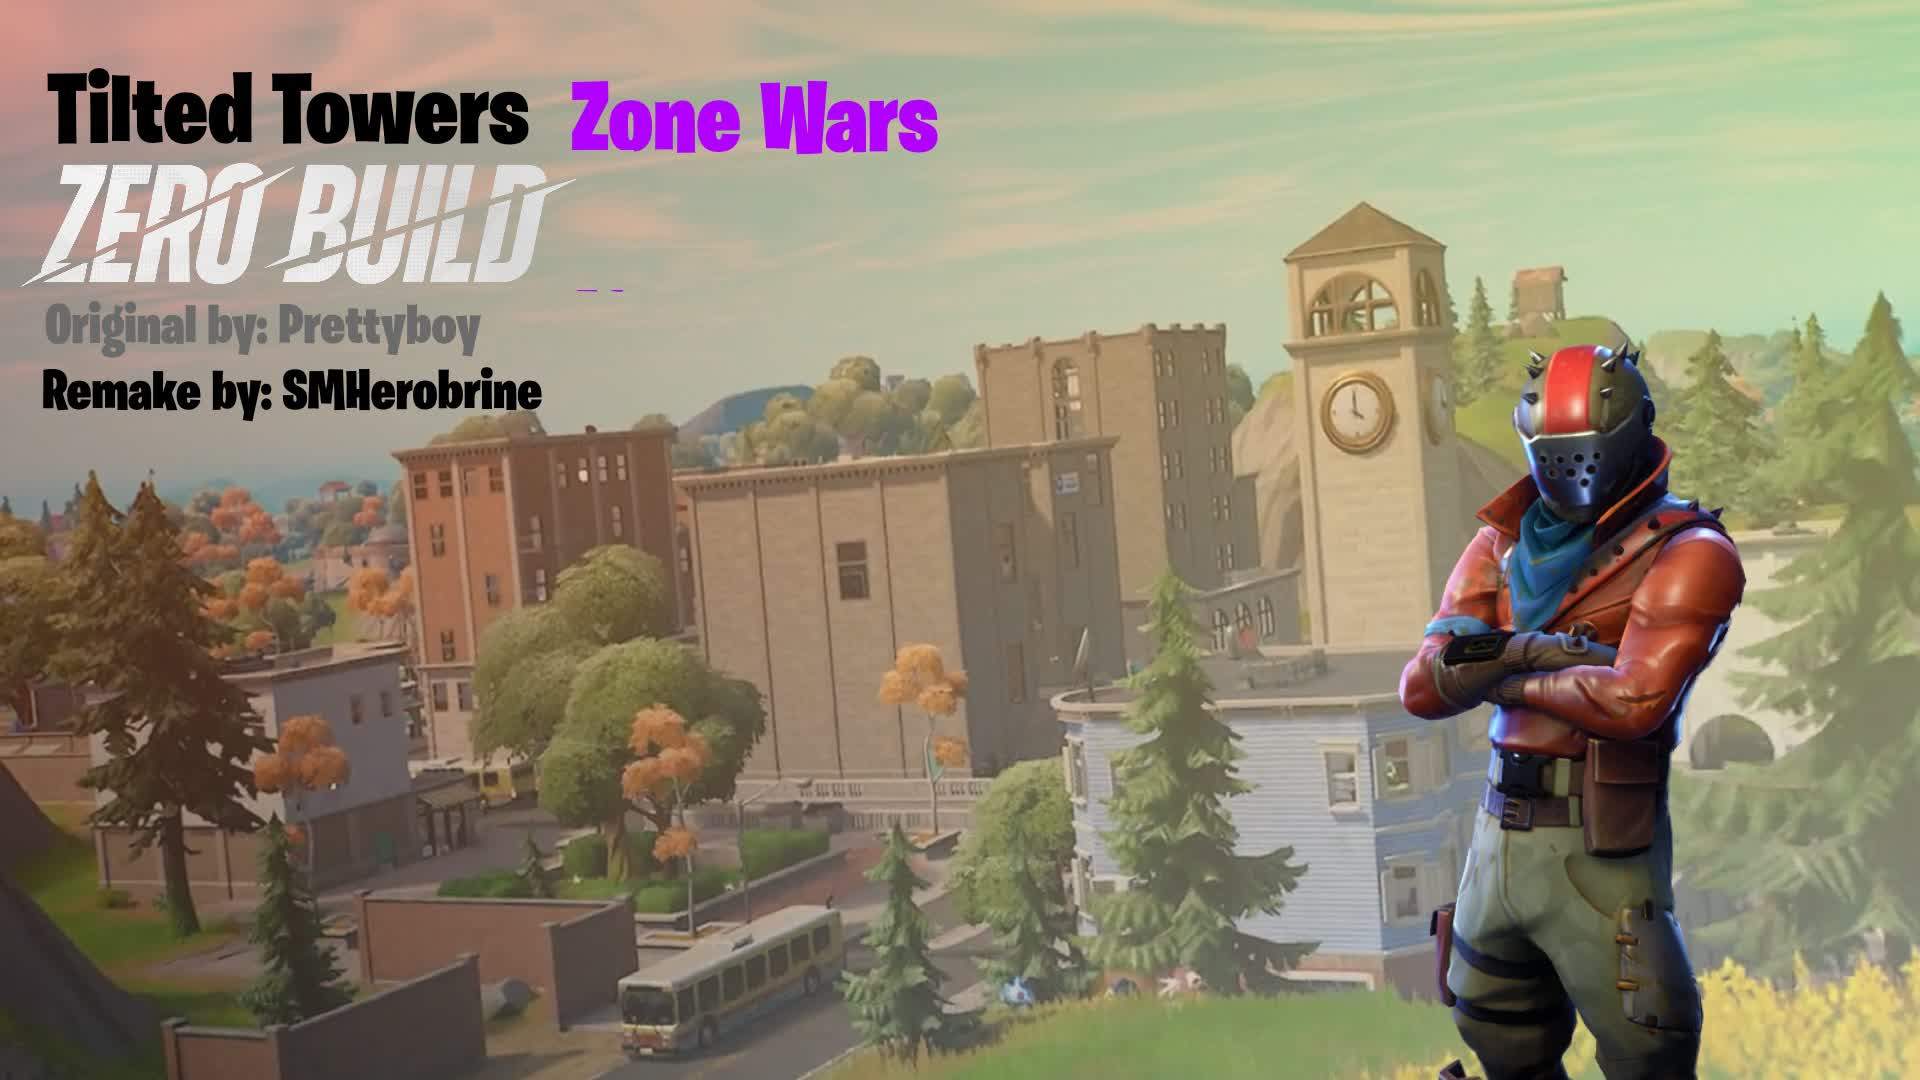 Tilted Towers Zone Wars [Zero Builds]